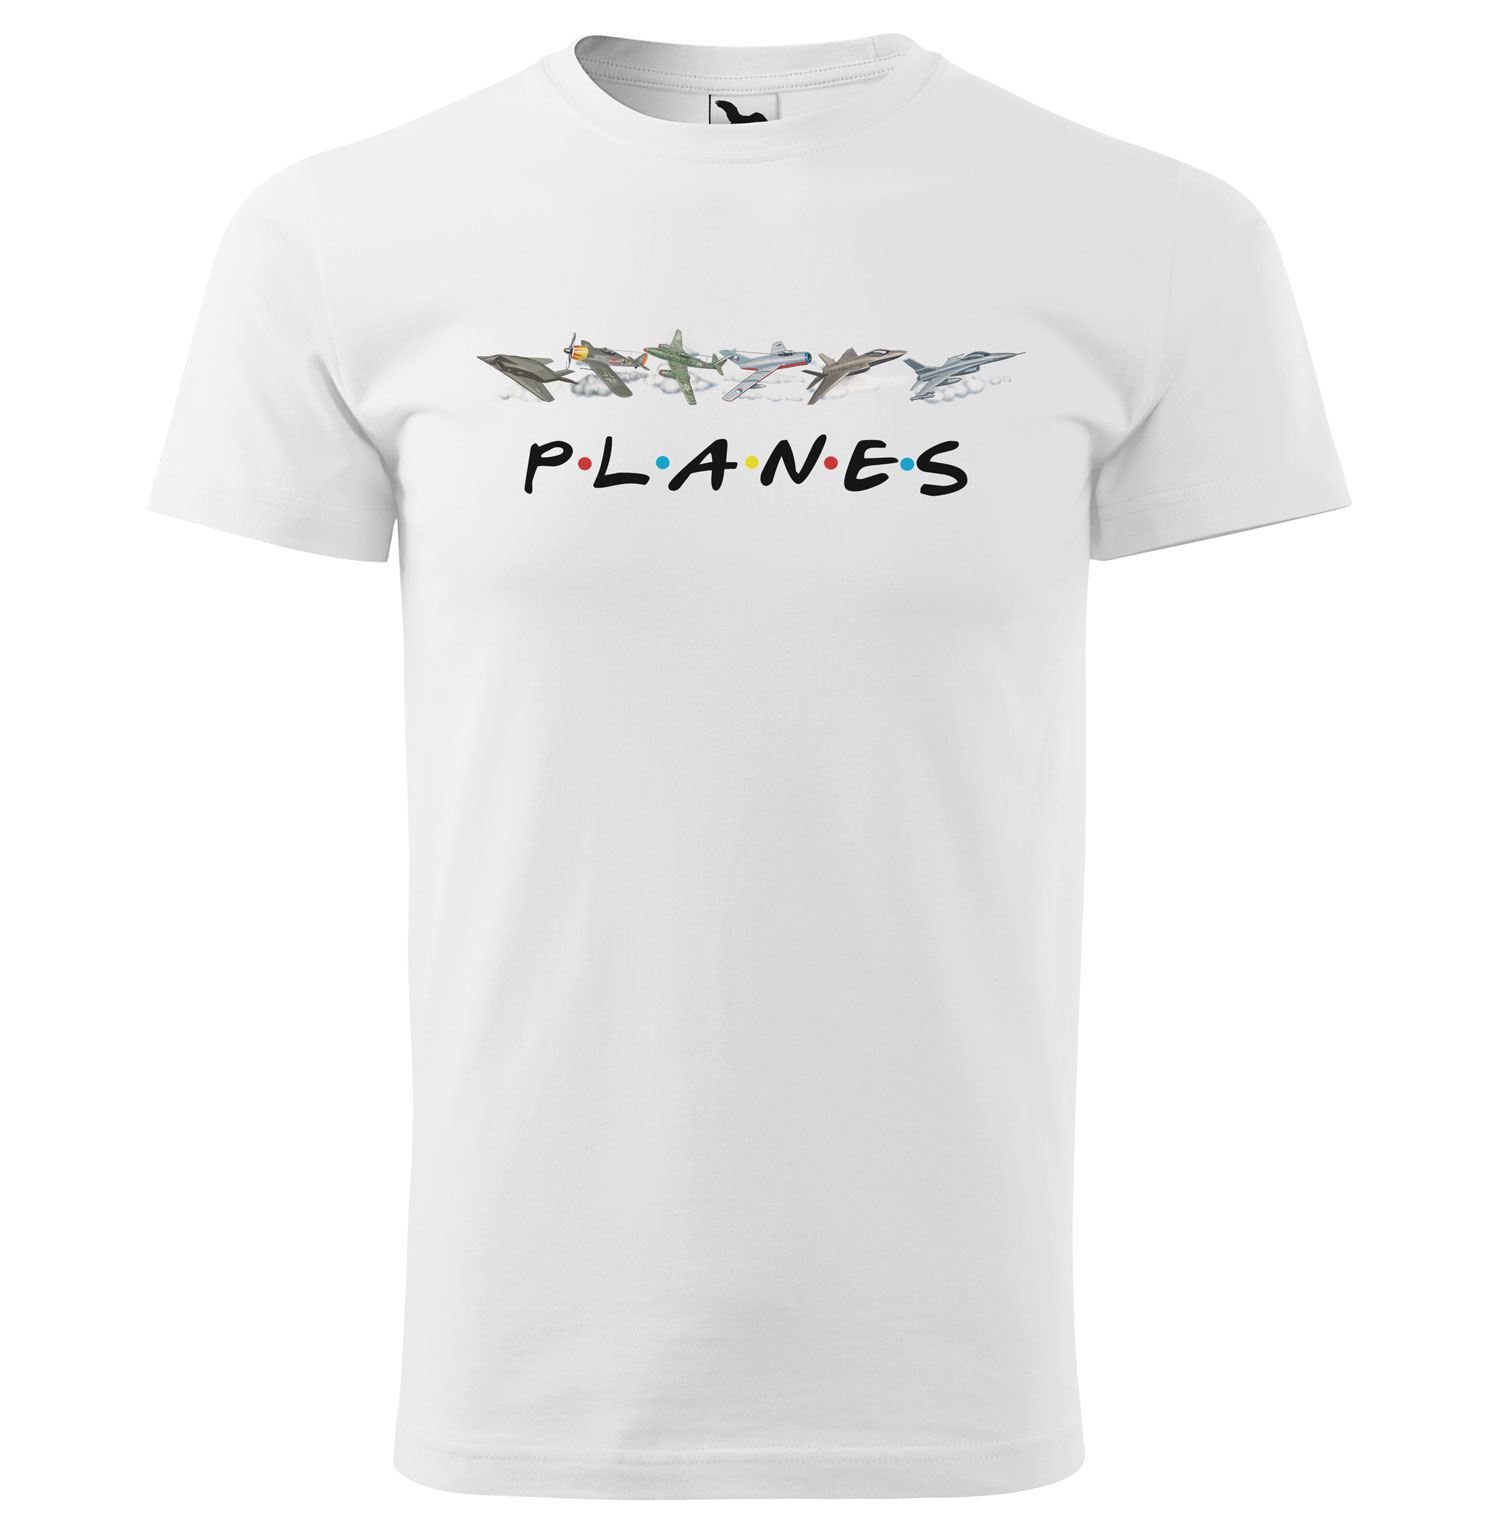 Tričko Planes (Velikost: S, Typ: pro muže, Barva trička: Bílá)